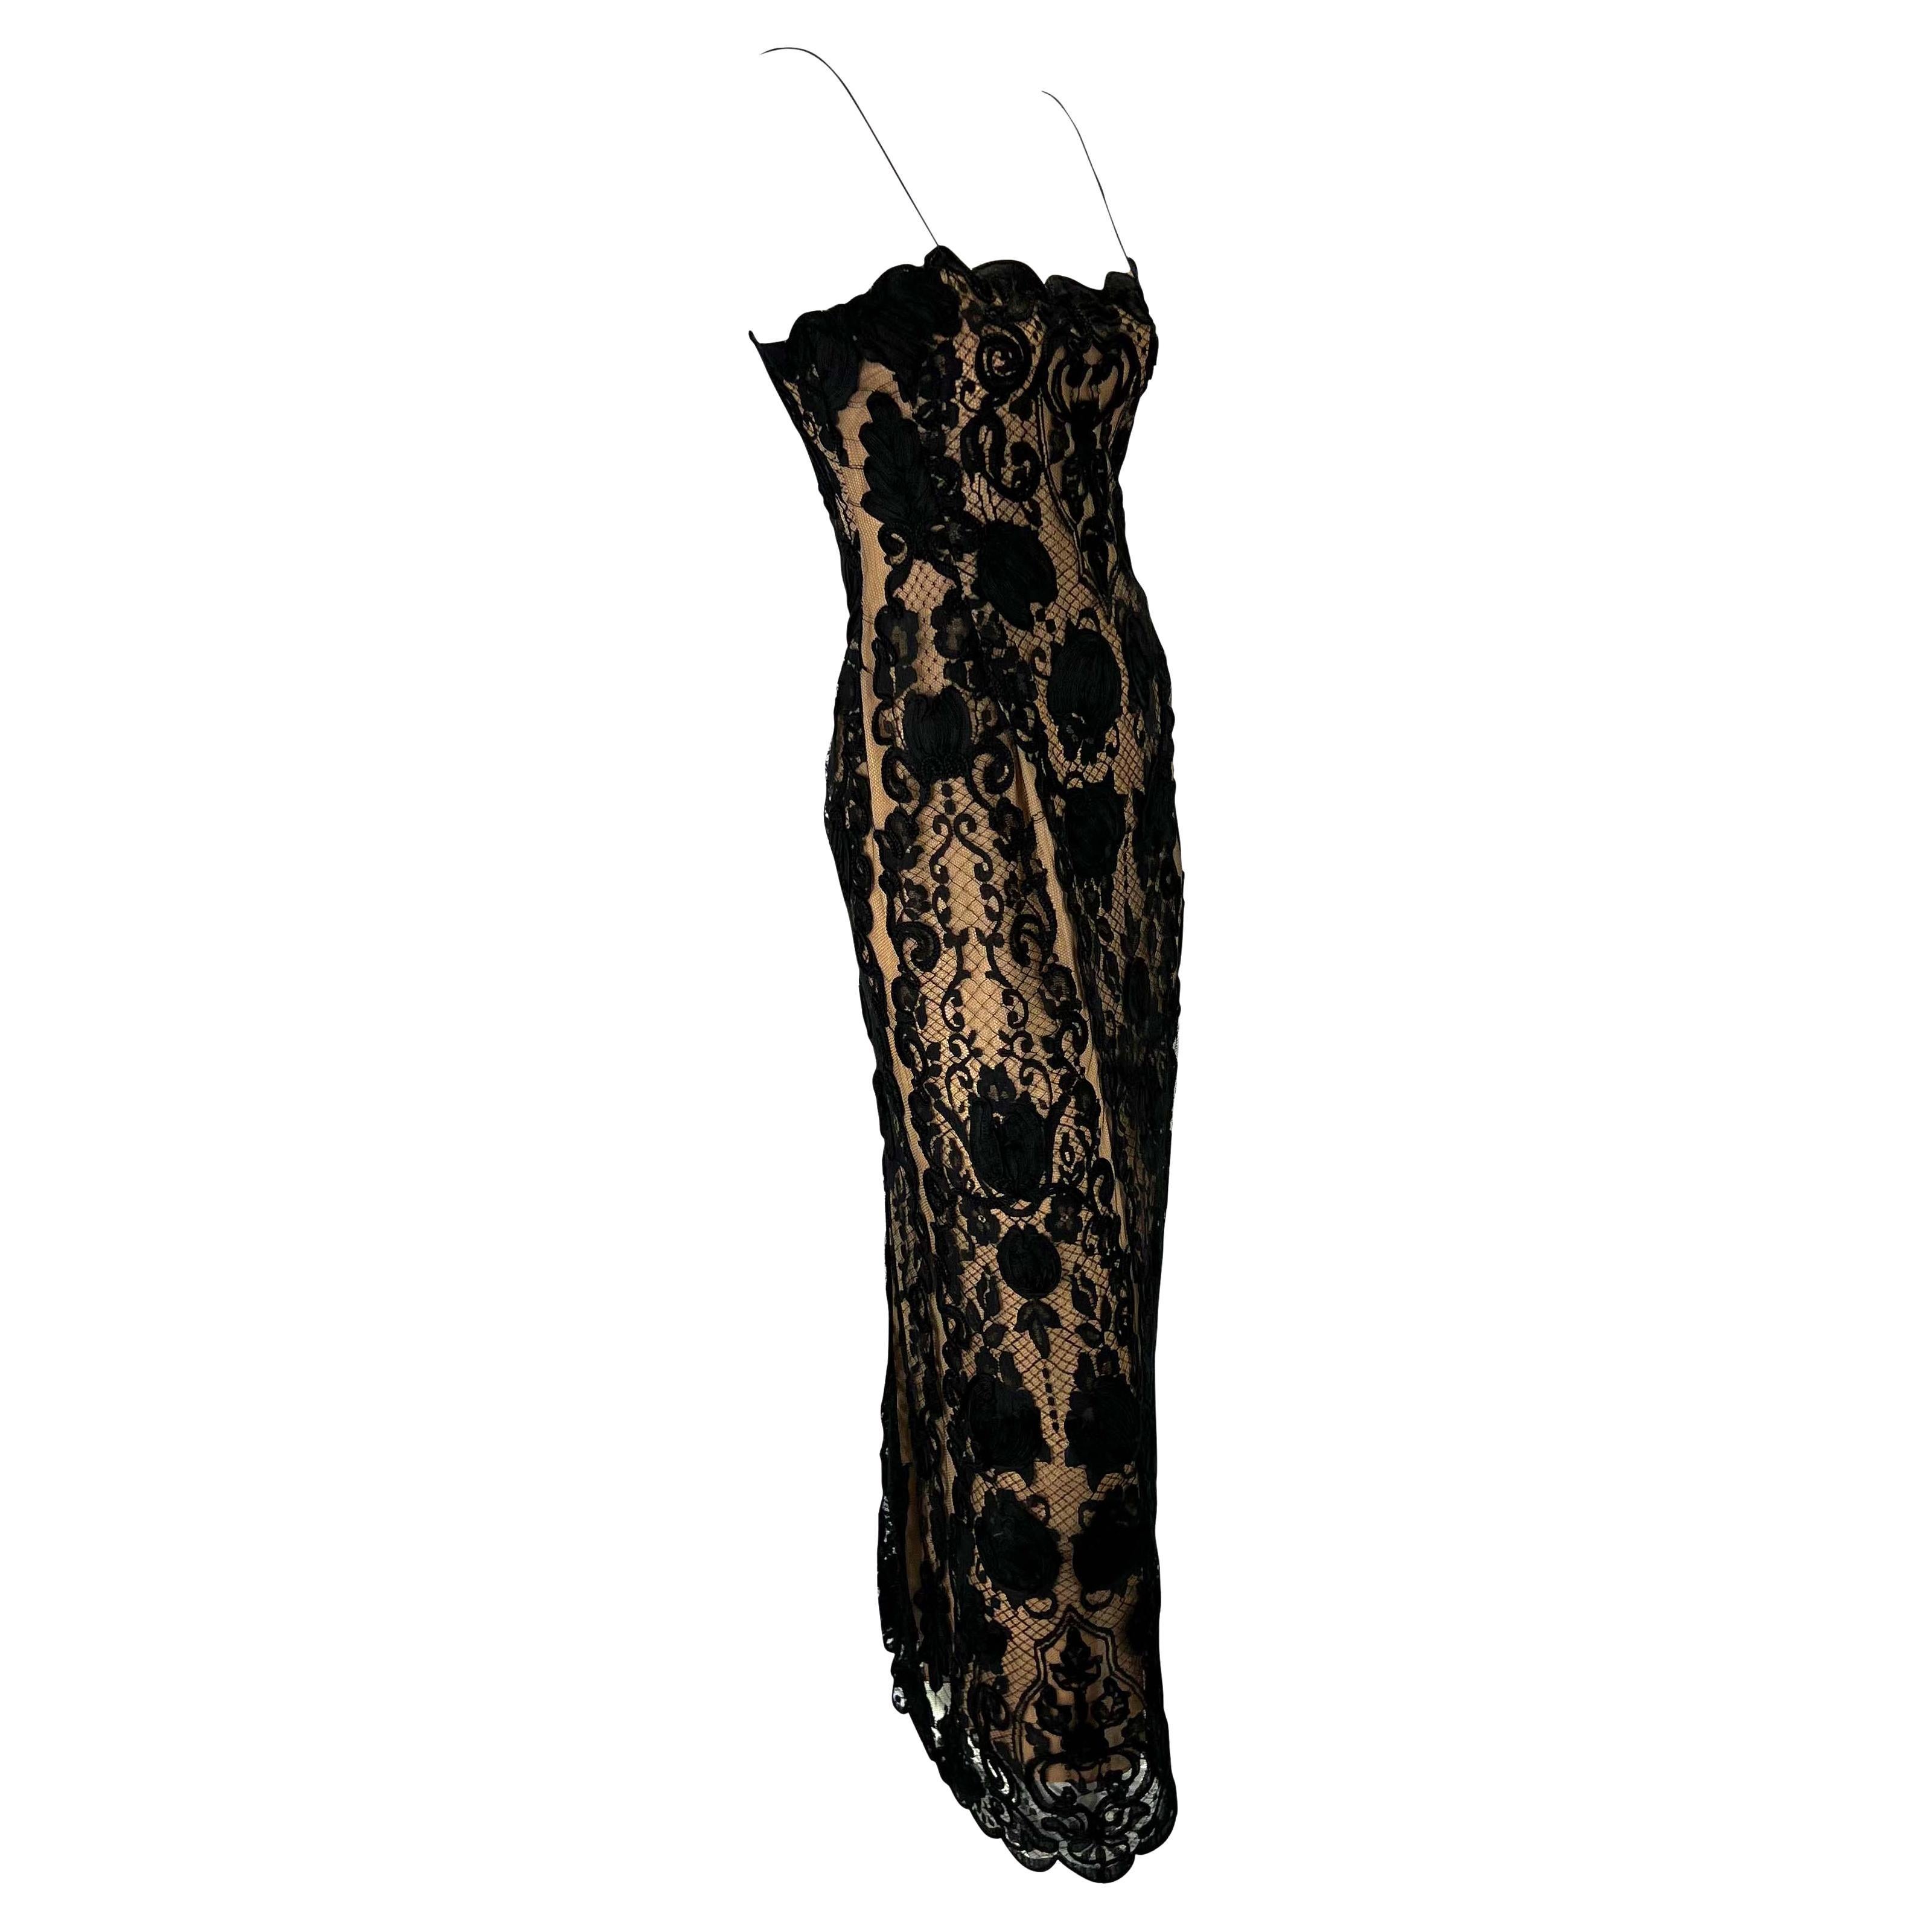 Women's S/S 1996 Bill Blass Couture Runway Black Lace Overlay Spaghetti Strap Dress